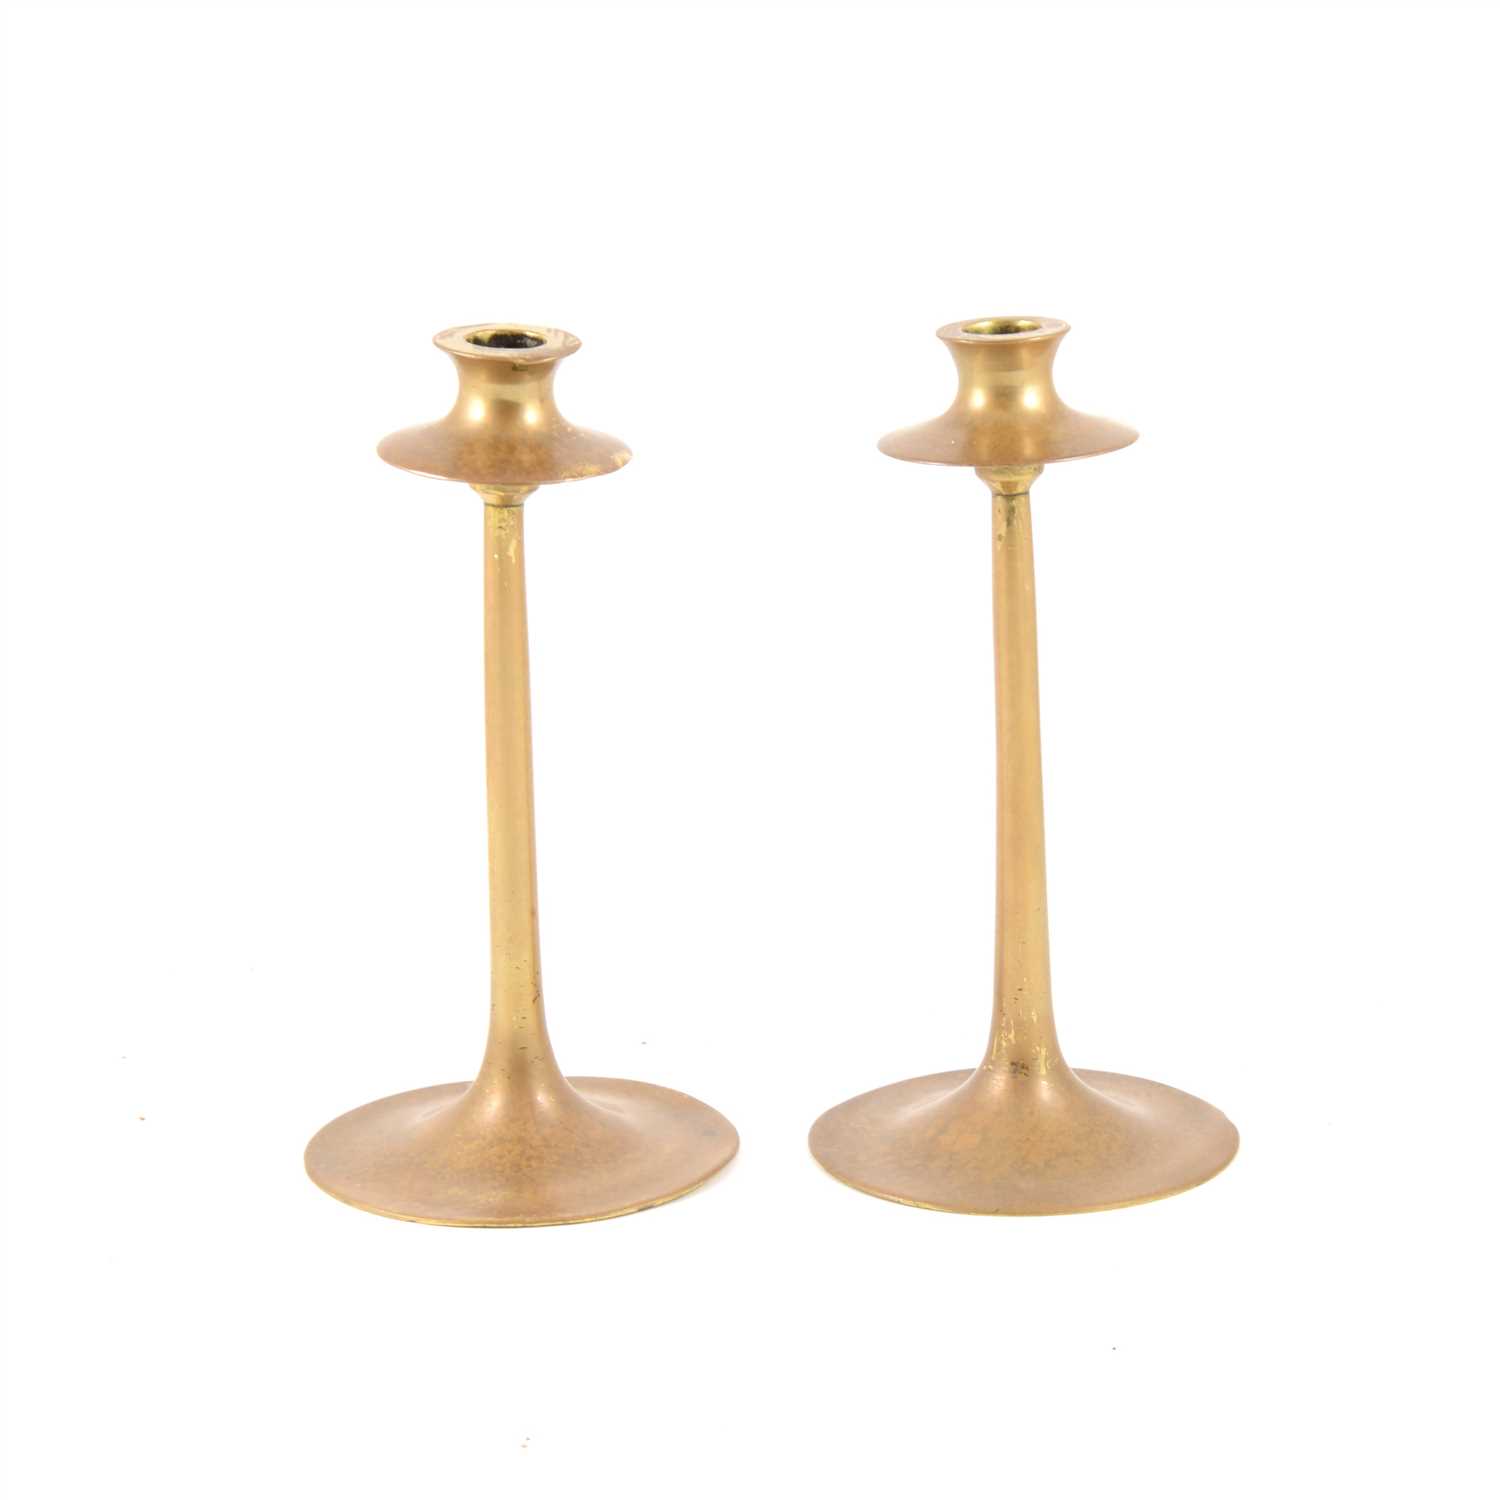 Lot 99 - A pair of Arts & Crafts bronze candlesticks, Dryad design